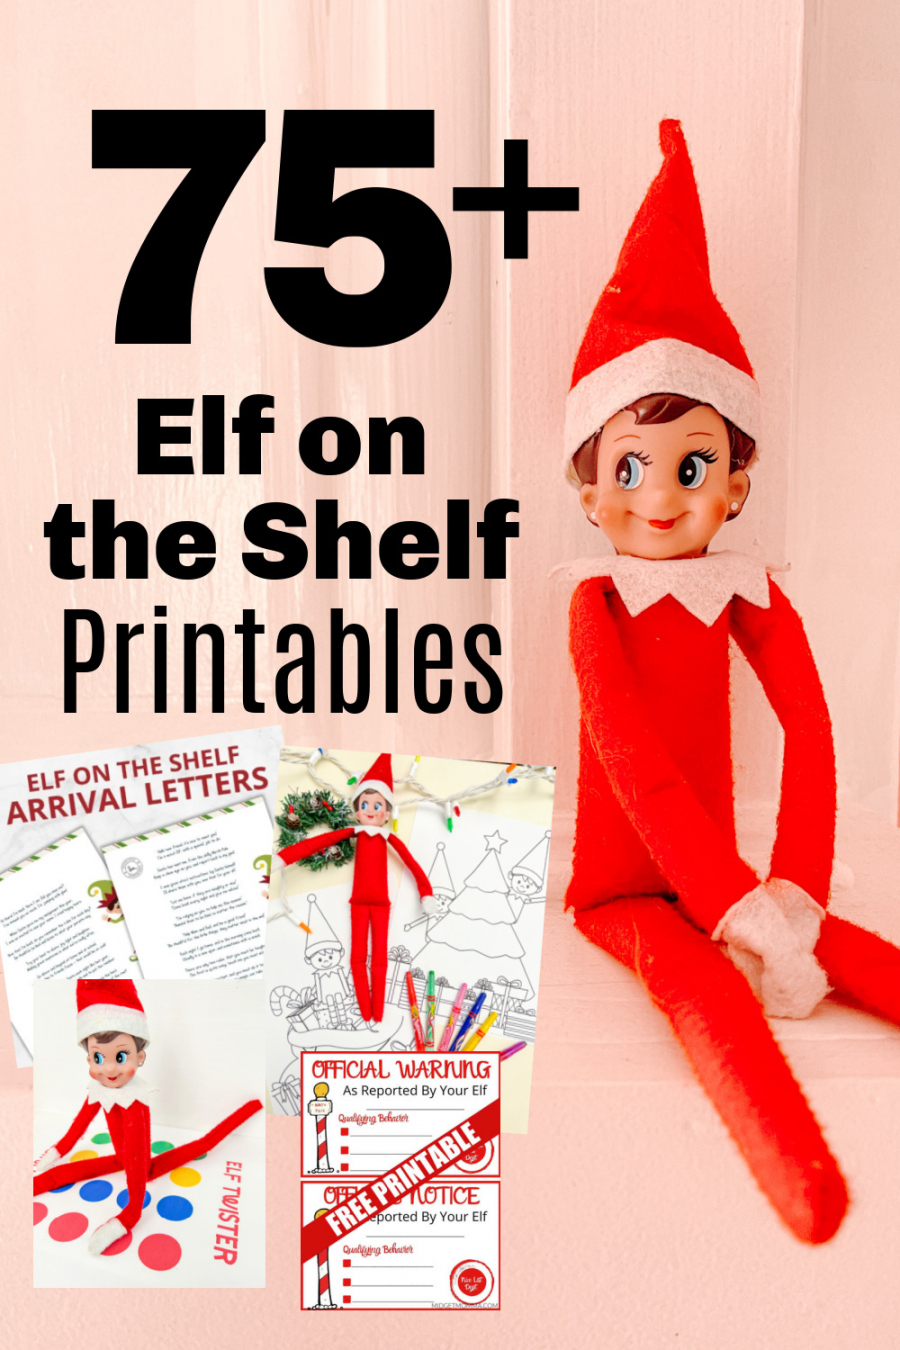 Elf On A Shelf Printables Free - Printable - Ultimate List of FREE Elf on the Shelf Printables - Over